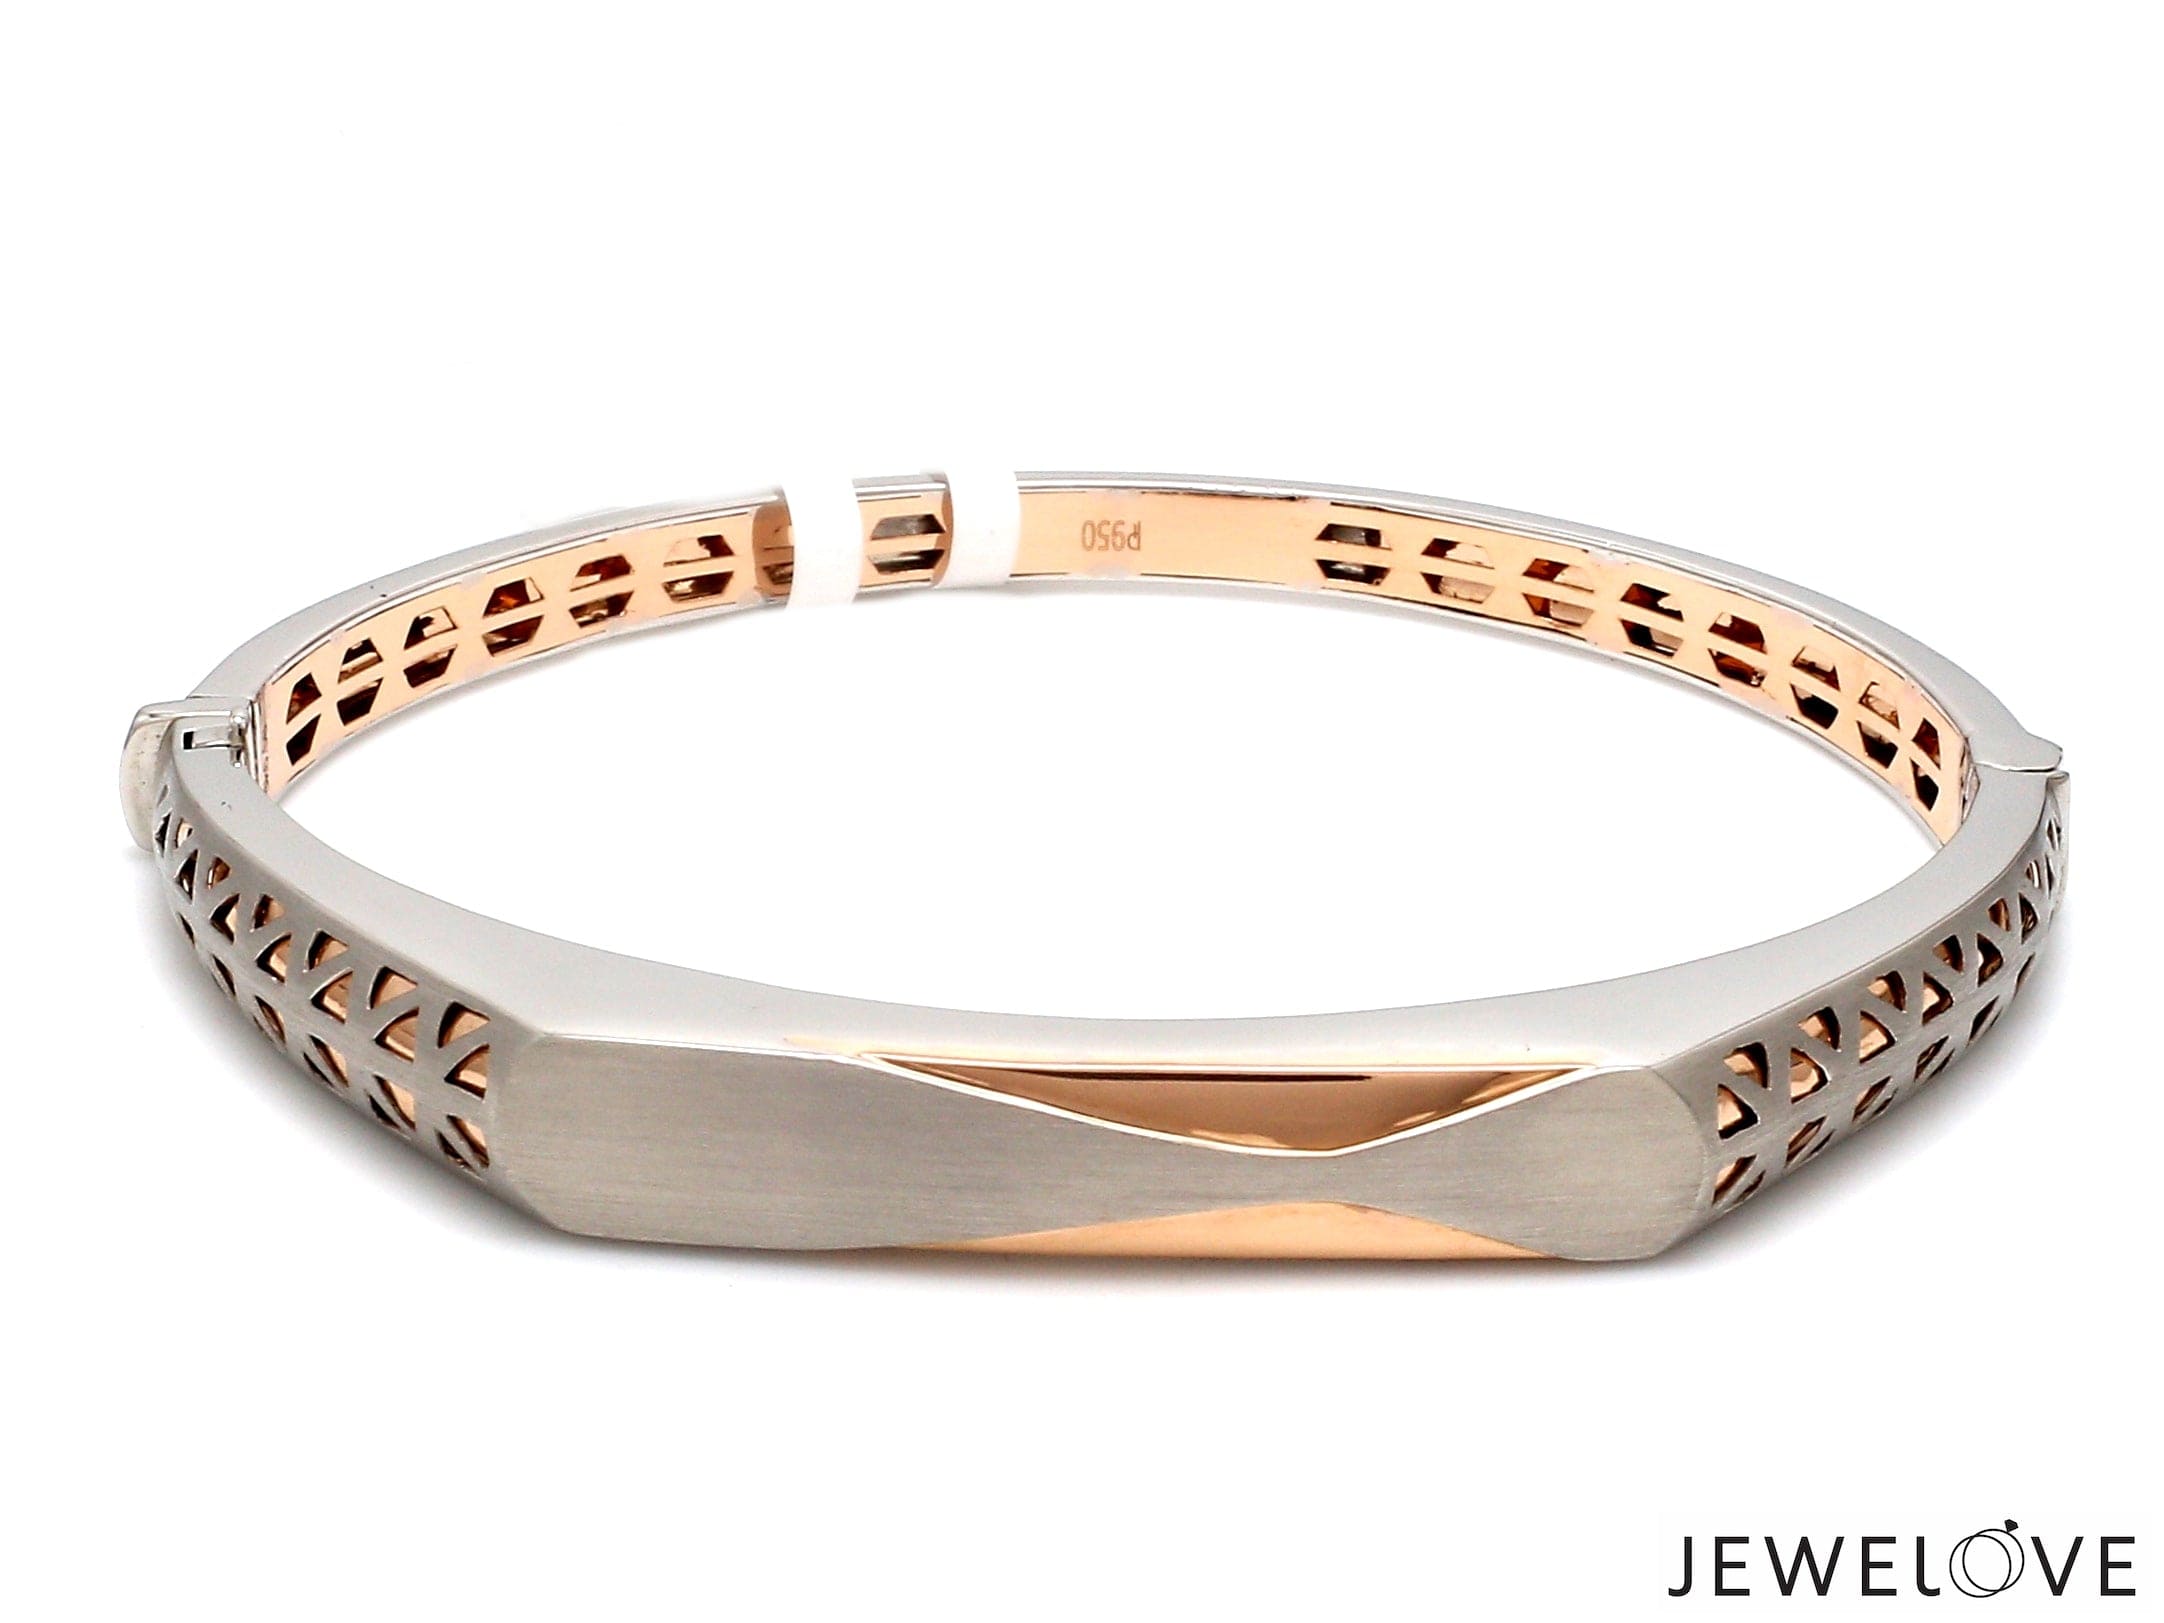 Sparkling Heart Tennis Bracelet | Rose gold plated | Pandora US